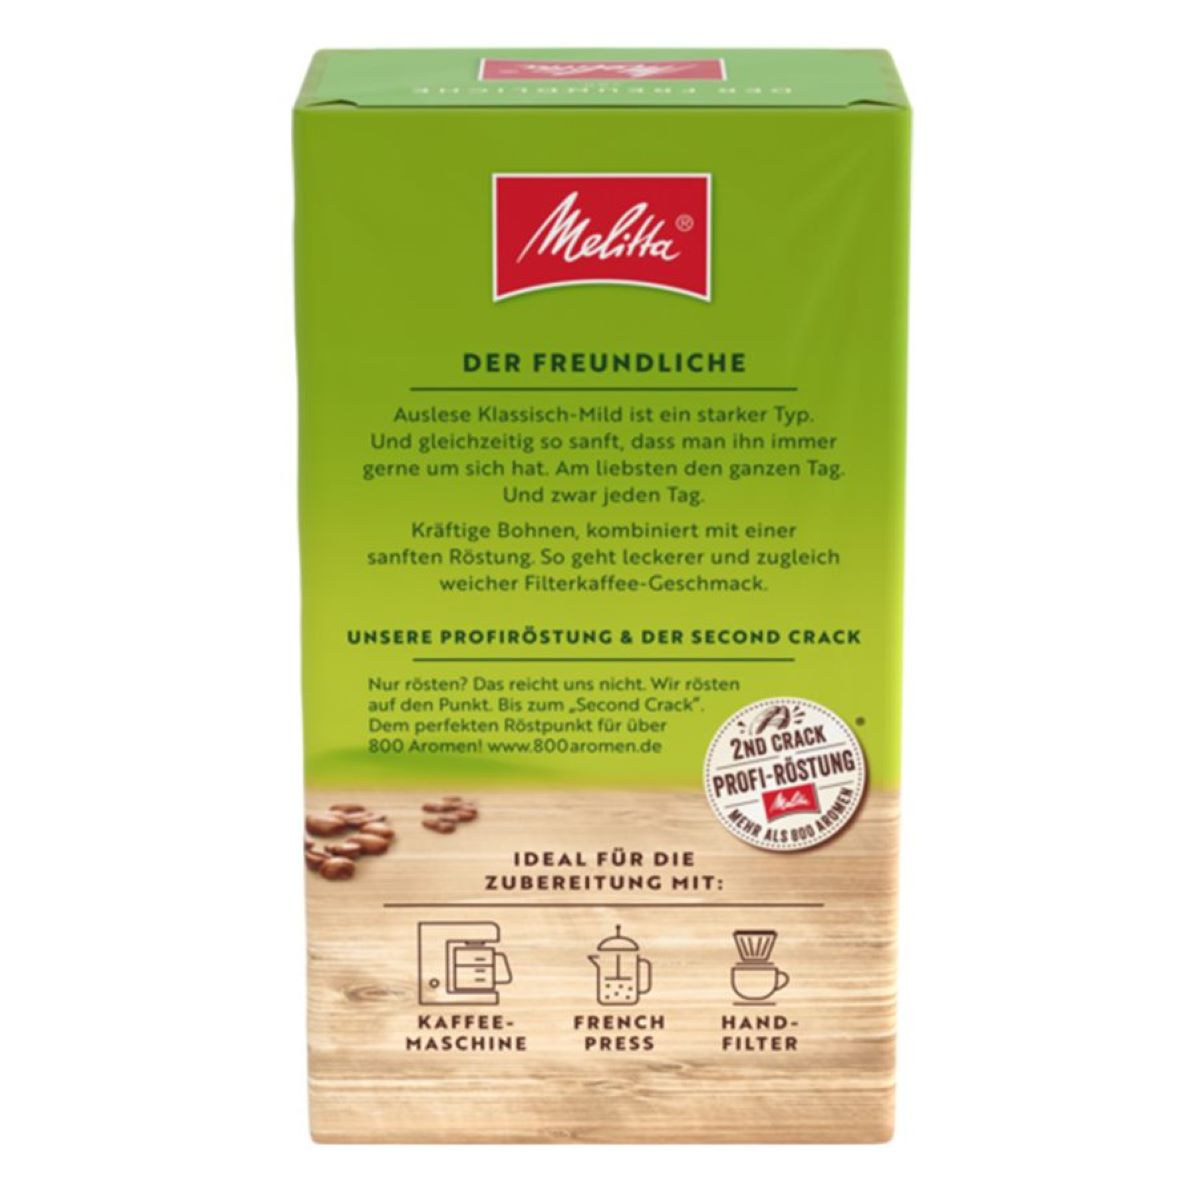 MELITTA Auslese Klassisch-mild gemahlener g Röstkaffee 500